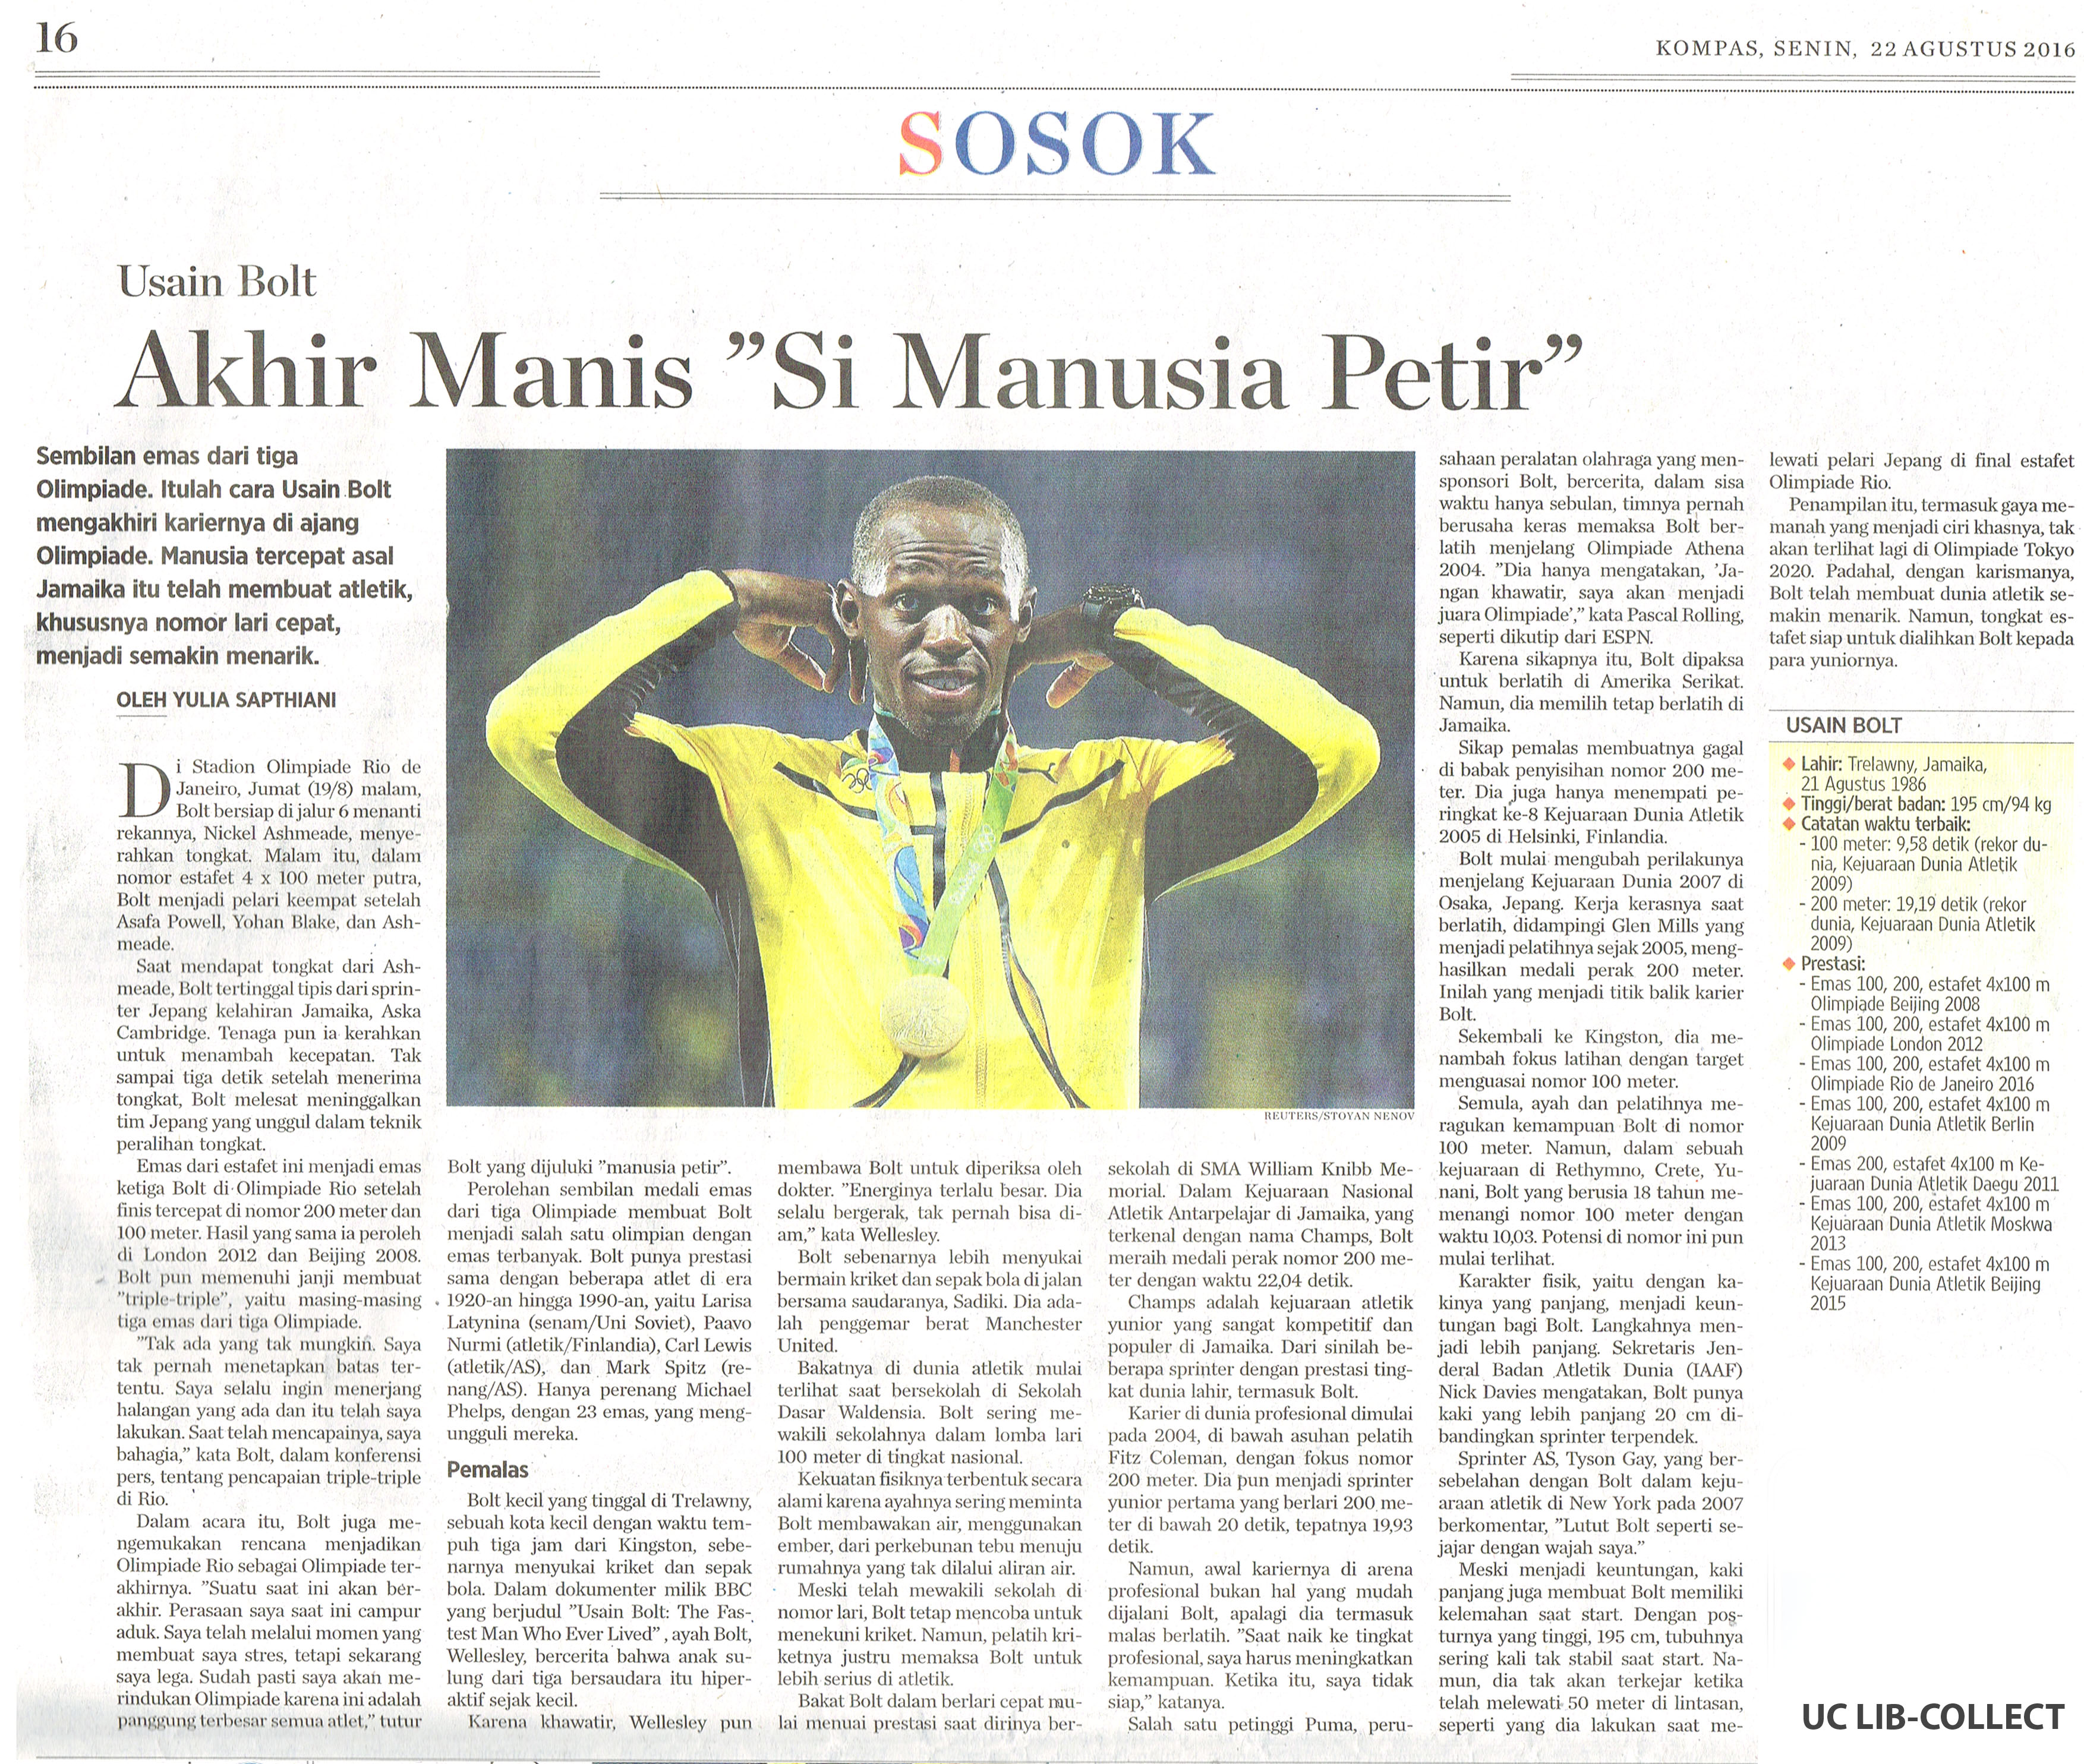 Usain Bolt Akhir Manis Si Manusia Petir. Kompas. 22 Agustus 2016. Hal 16